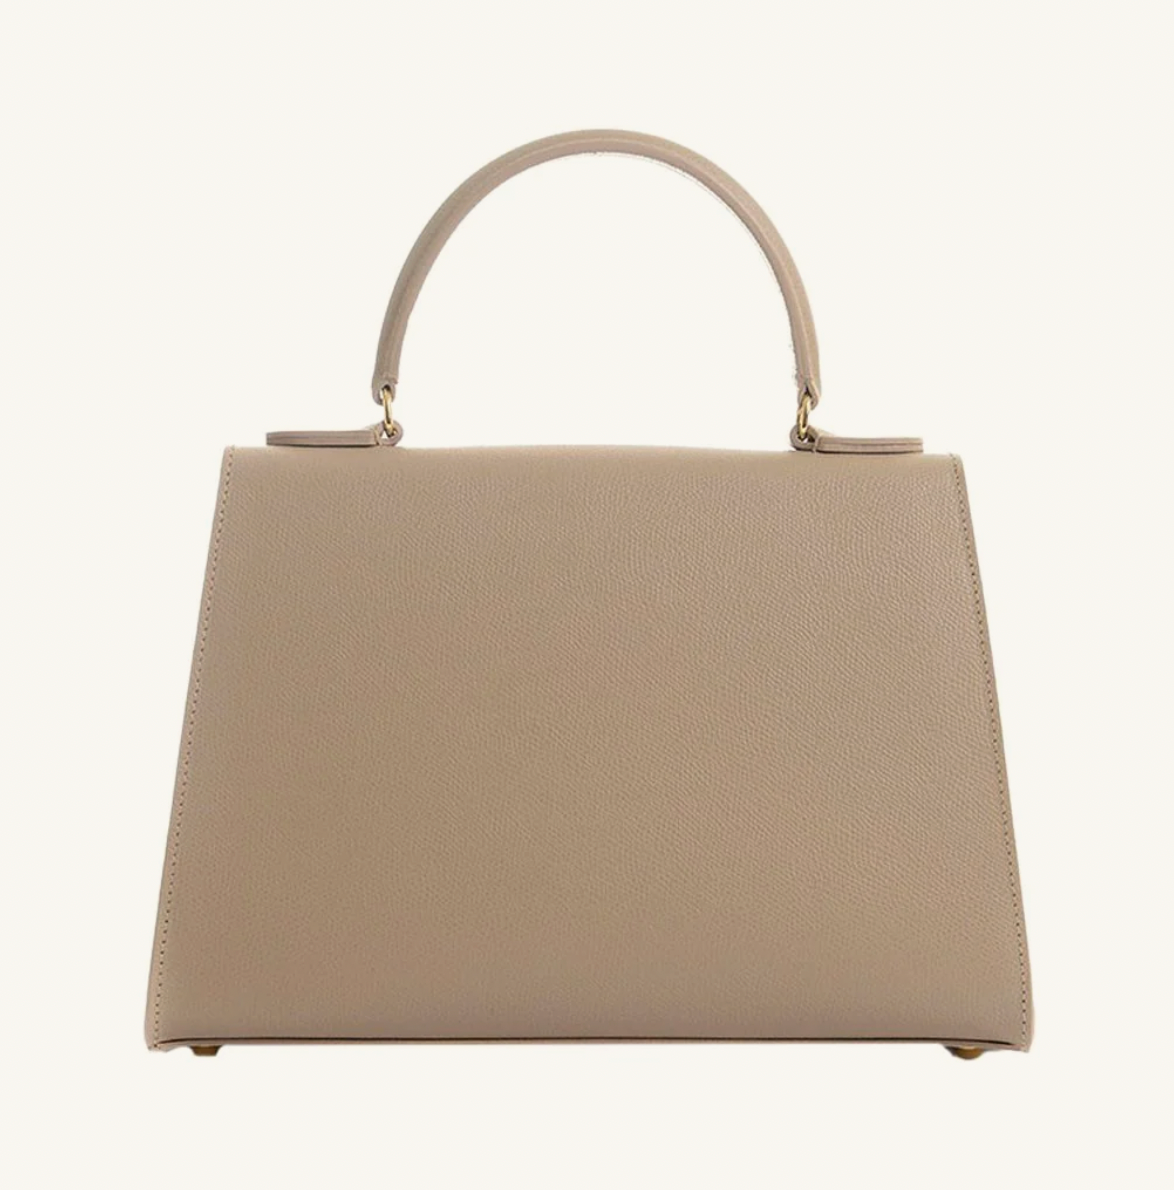 Carbotti handbags - Timeless Italian designs